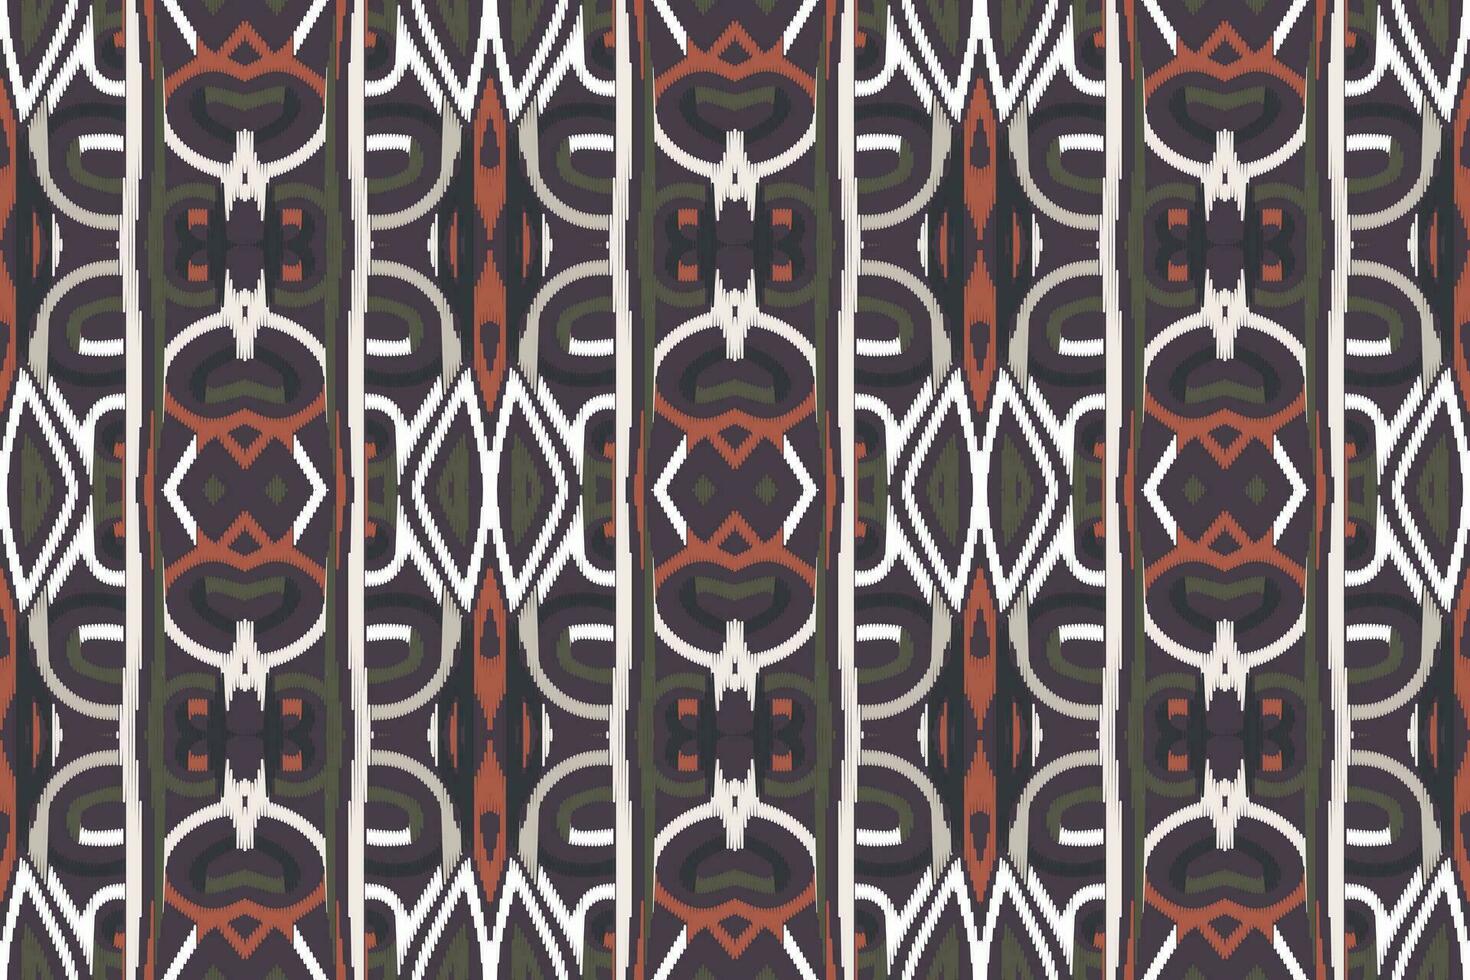 ikat damasco cachemir bordado antecedentes. ikat impresión geométrico étnico oriental modelo tradicional.azteca estilo resumen vector ilustración.diseño para textura,tela,ropa,envoltura,pareo.